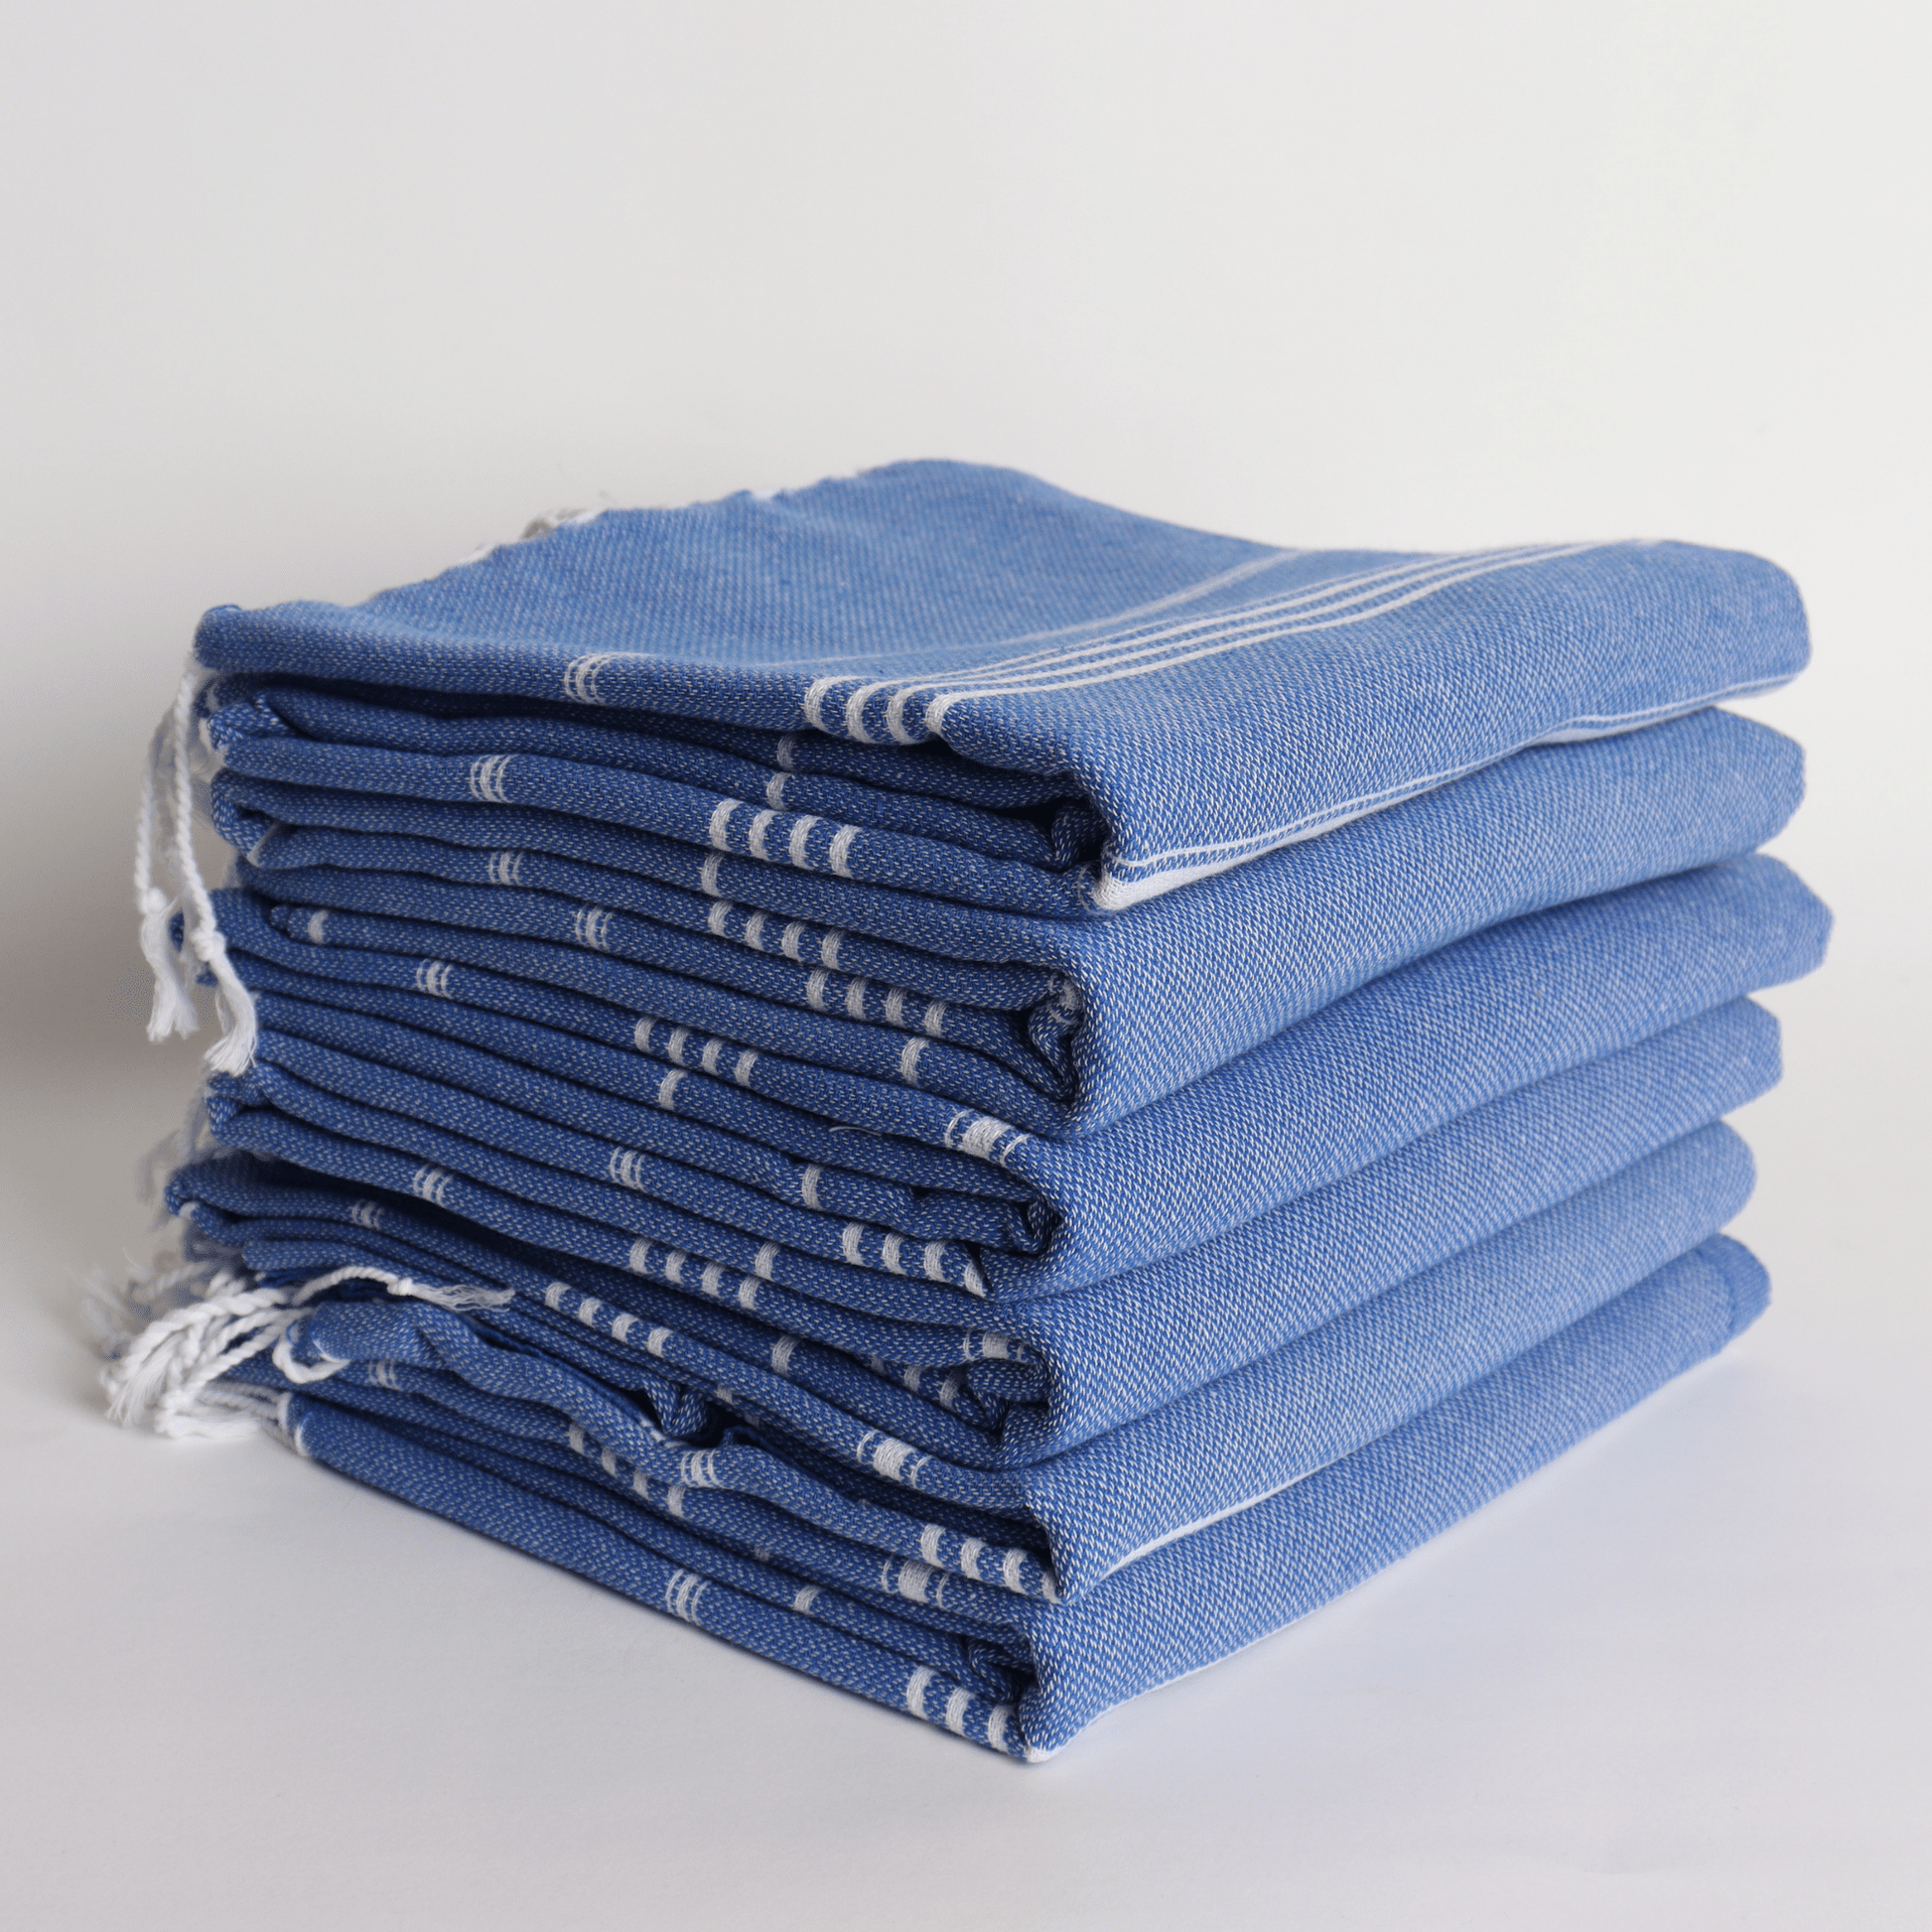 Blue Turkish Beach Towel Sultan - Wholesale and Bulk Turkish Towels